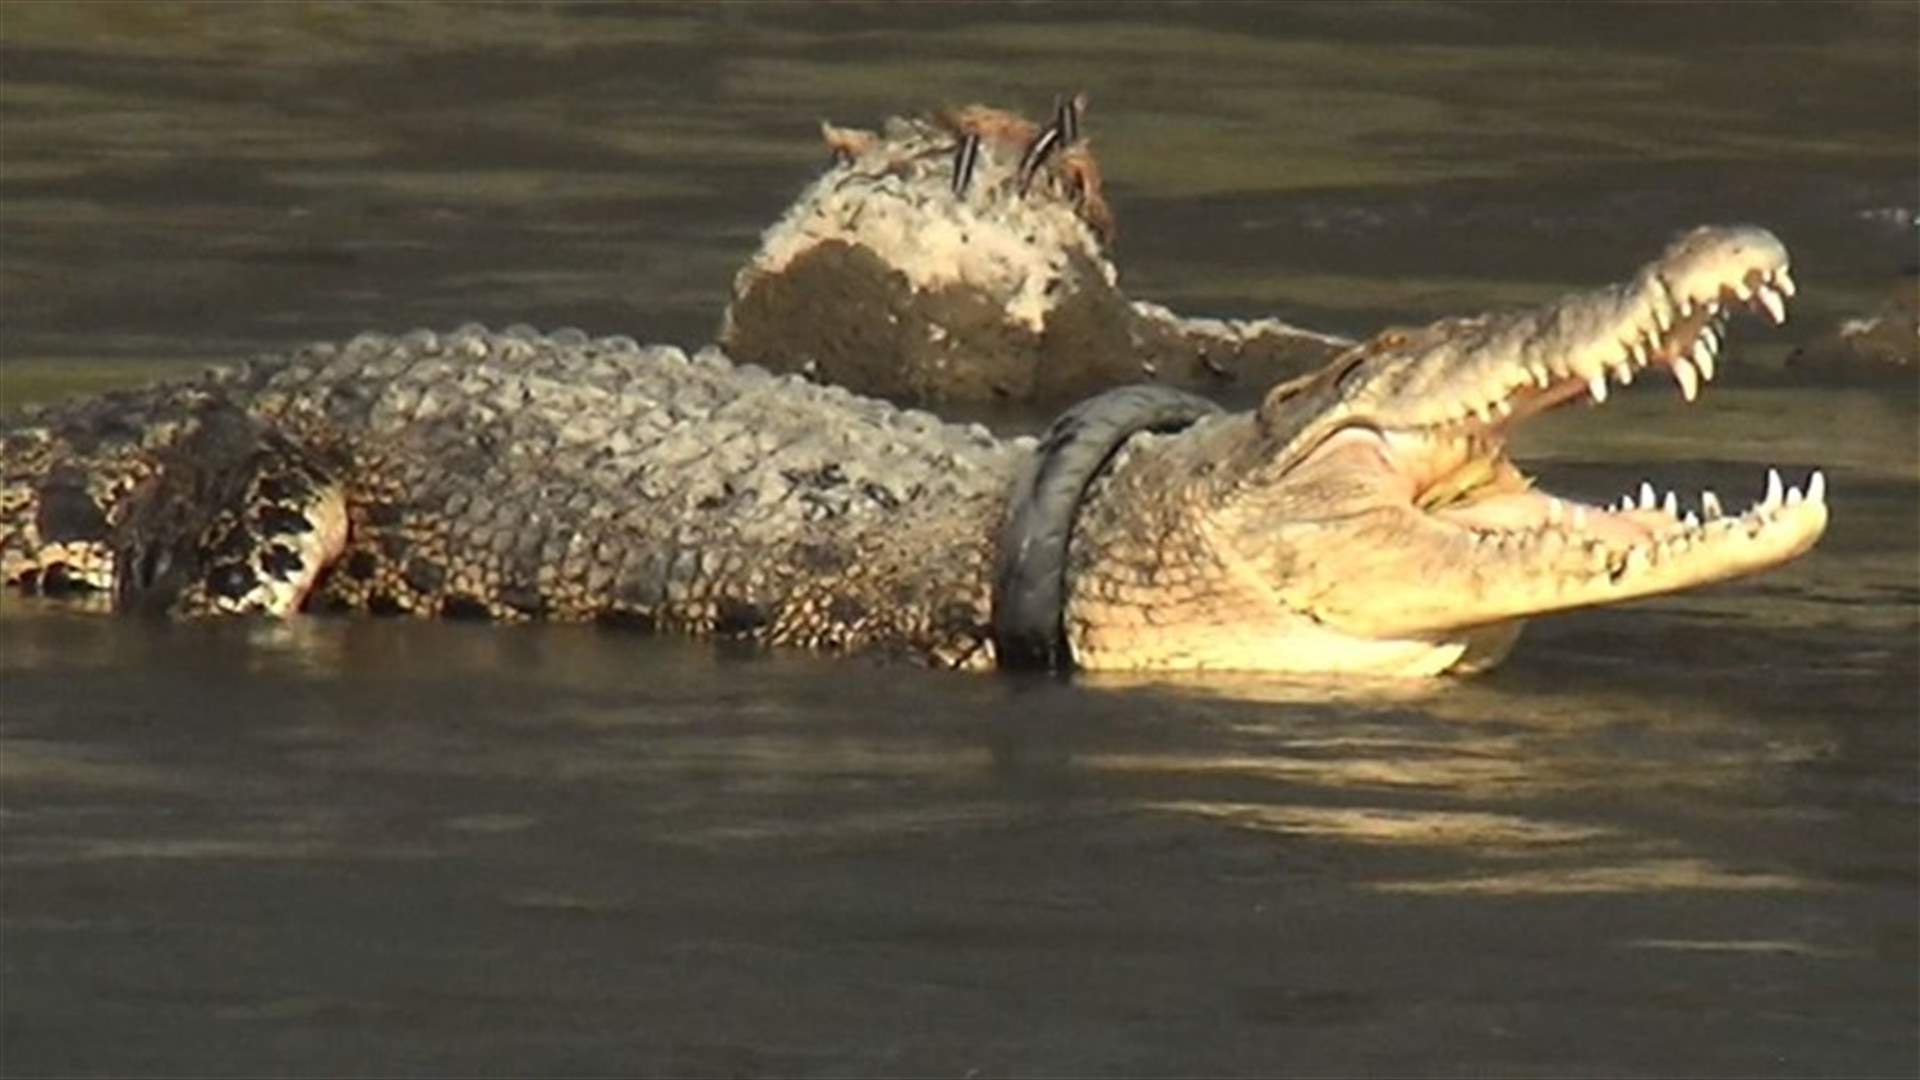 Indonesian crocodile with tire stuck around neck seeks relief